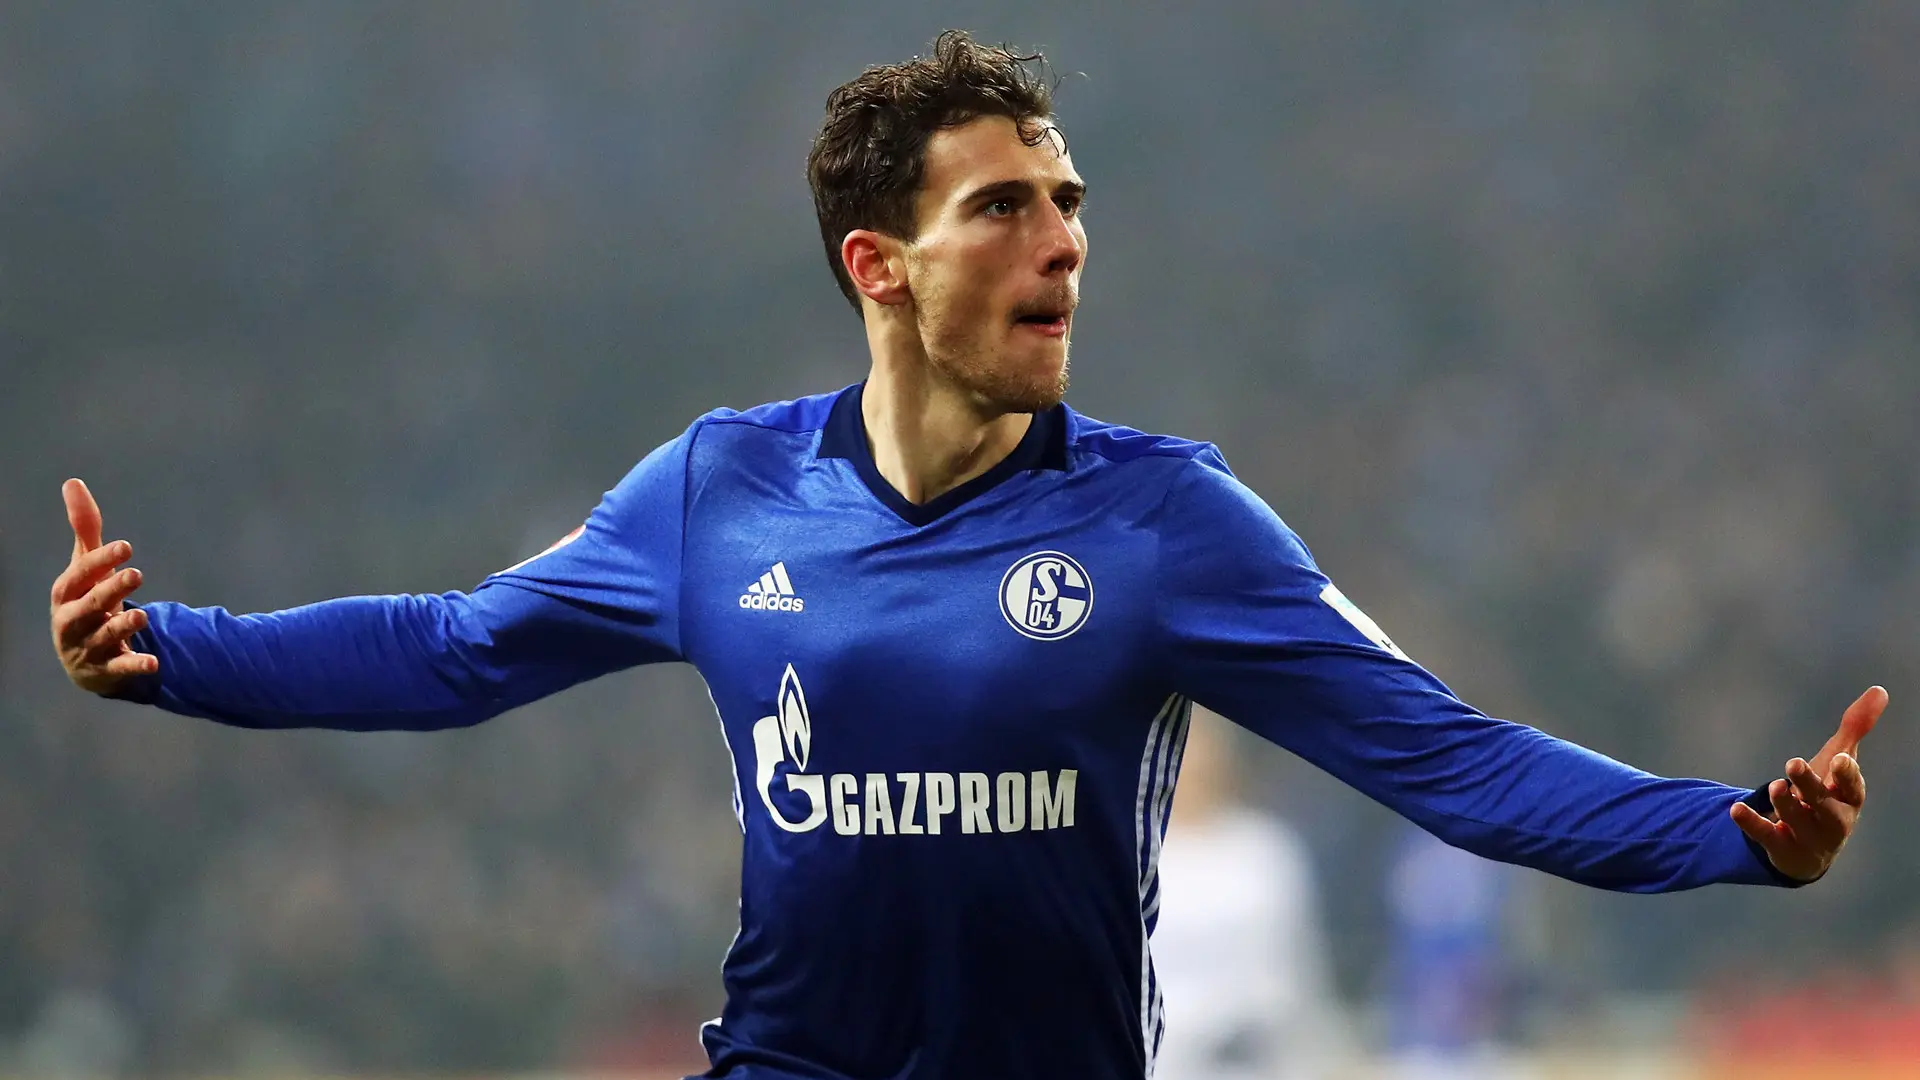 Leon Goretzka akan menjadi fokus suporter pada saat laga Bayern Munchen kontra Schalke